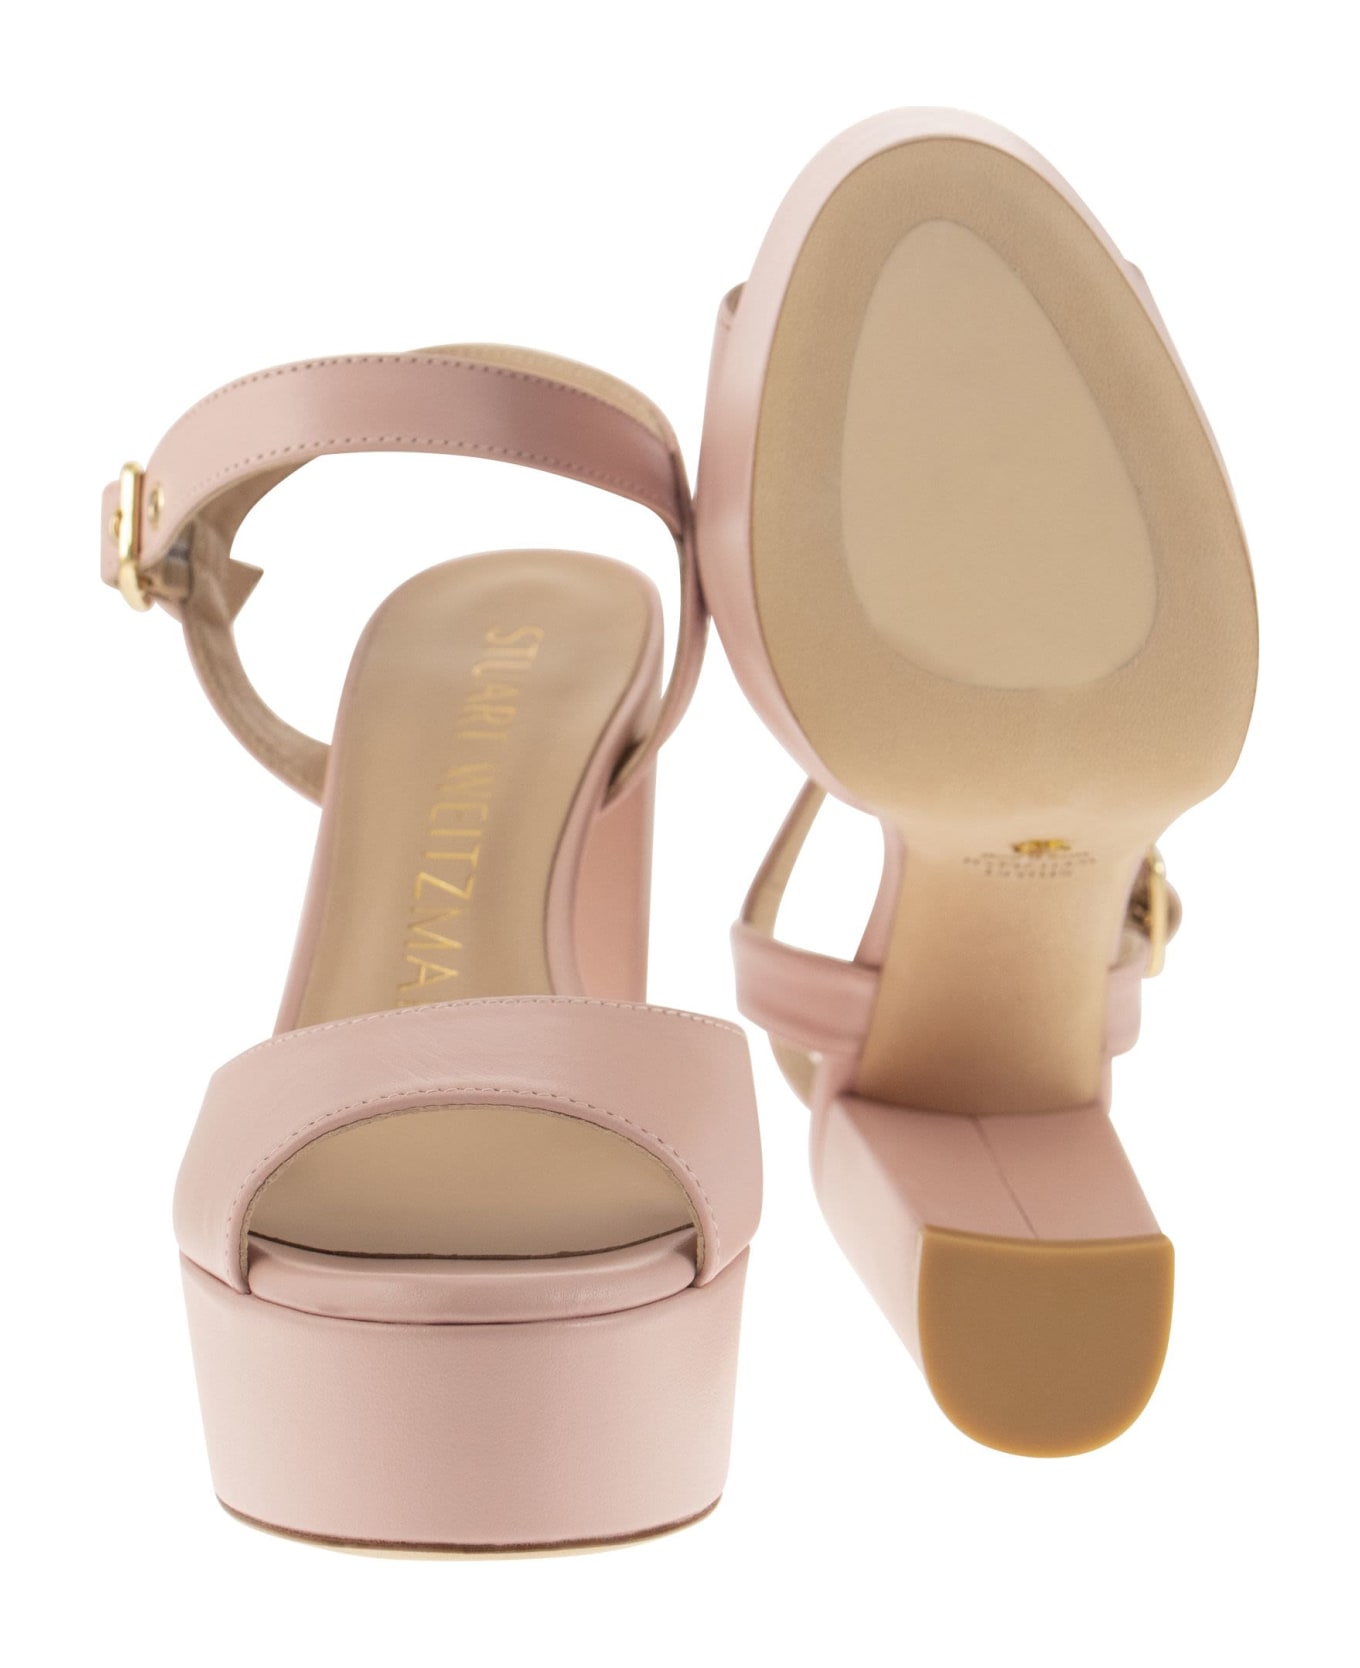 Stuart Weitzman Ryder - Leather Platform Sandals - Light Pink